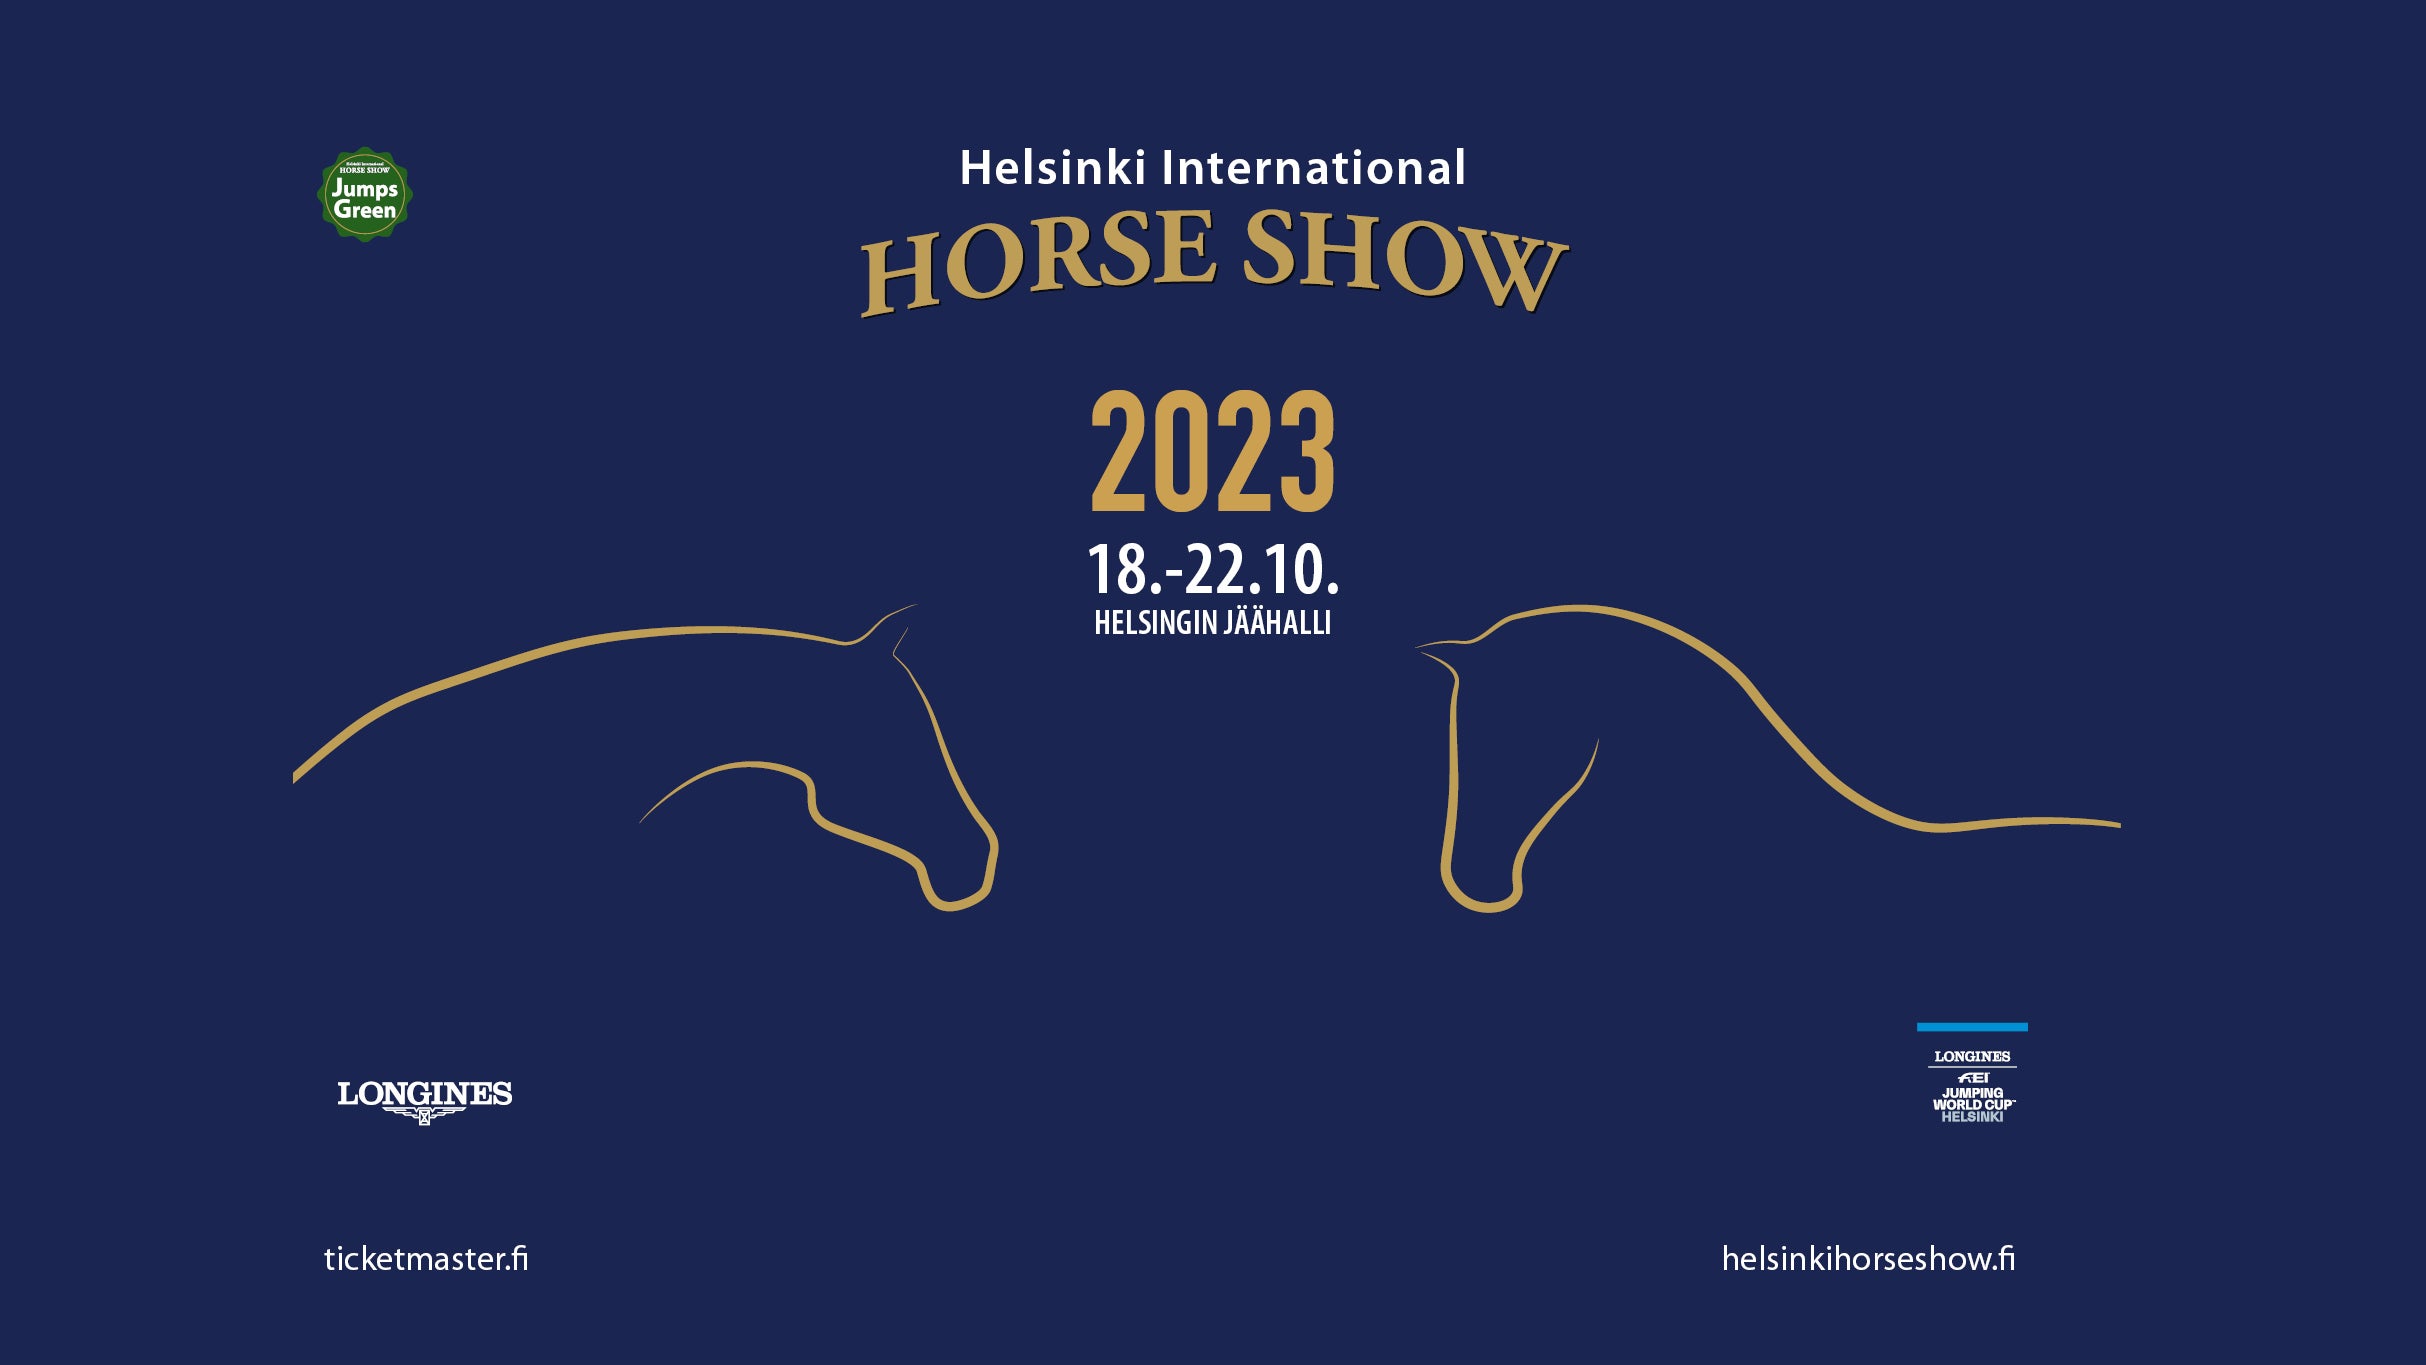 Helsinki International Horseshow presale information on freepresalepasswords.com